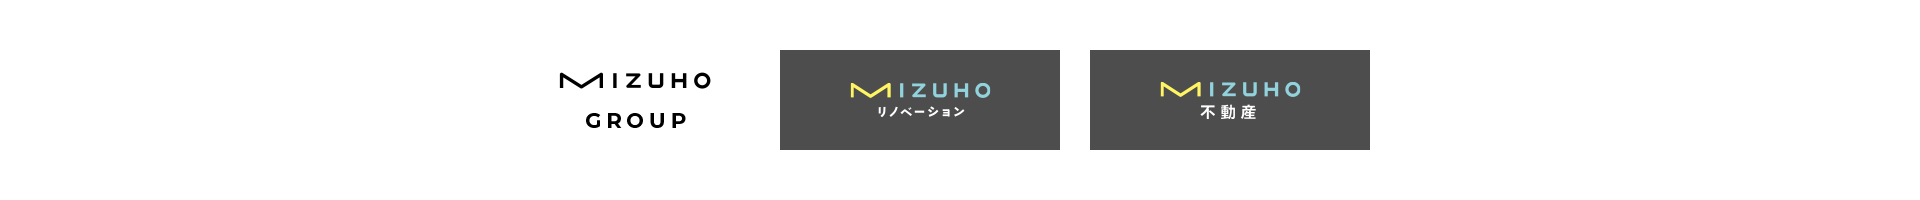 MIZUHO GROUP MIZUHOリノベーション MIZUHO不動産